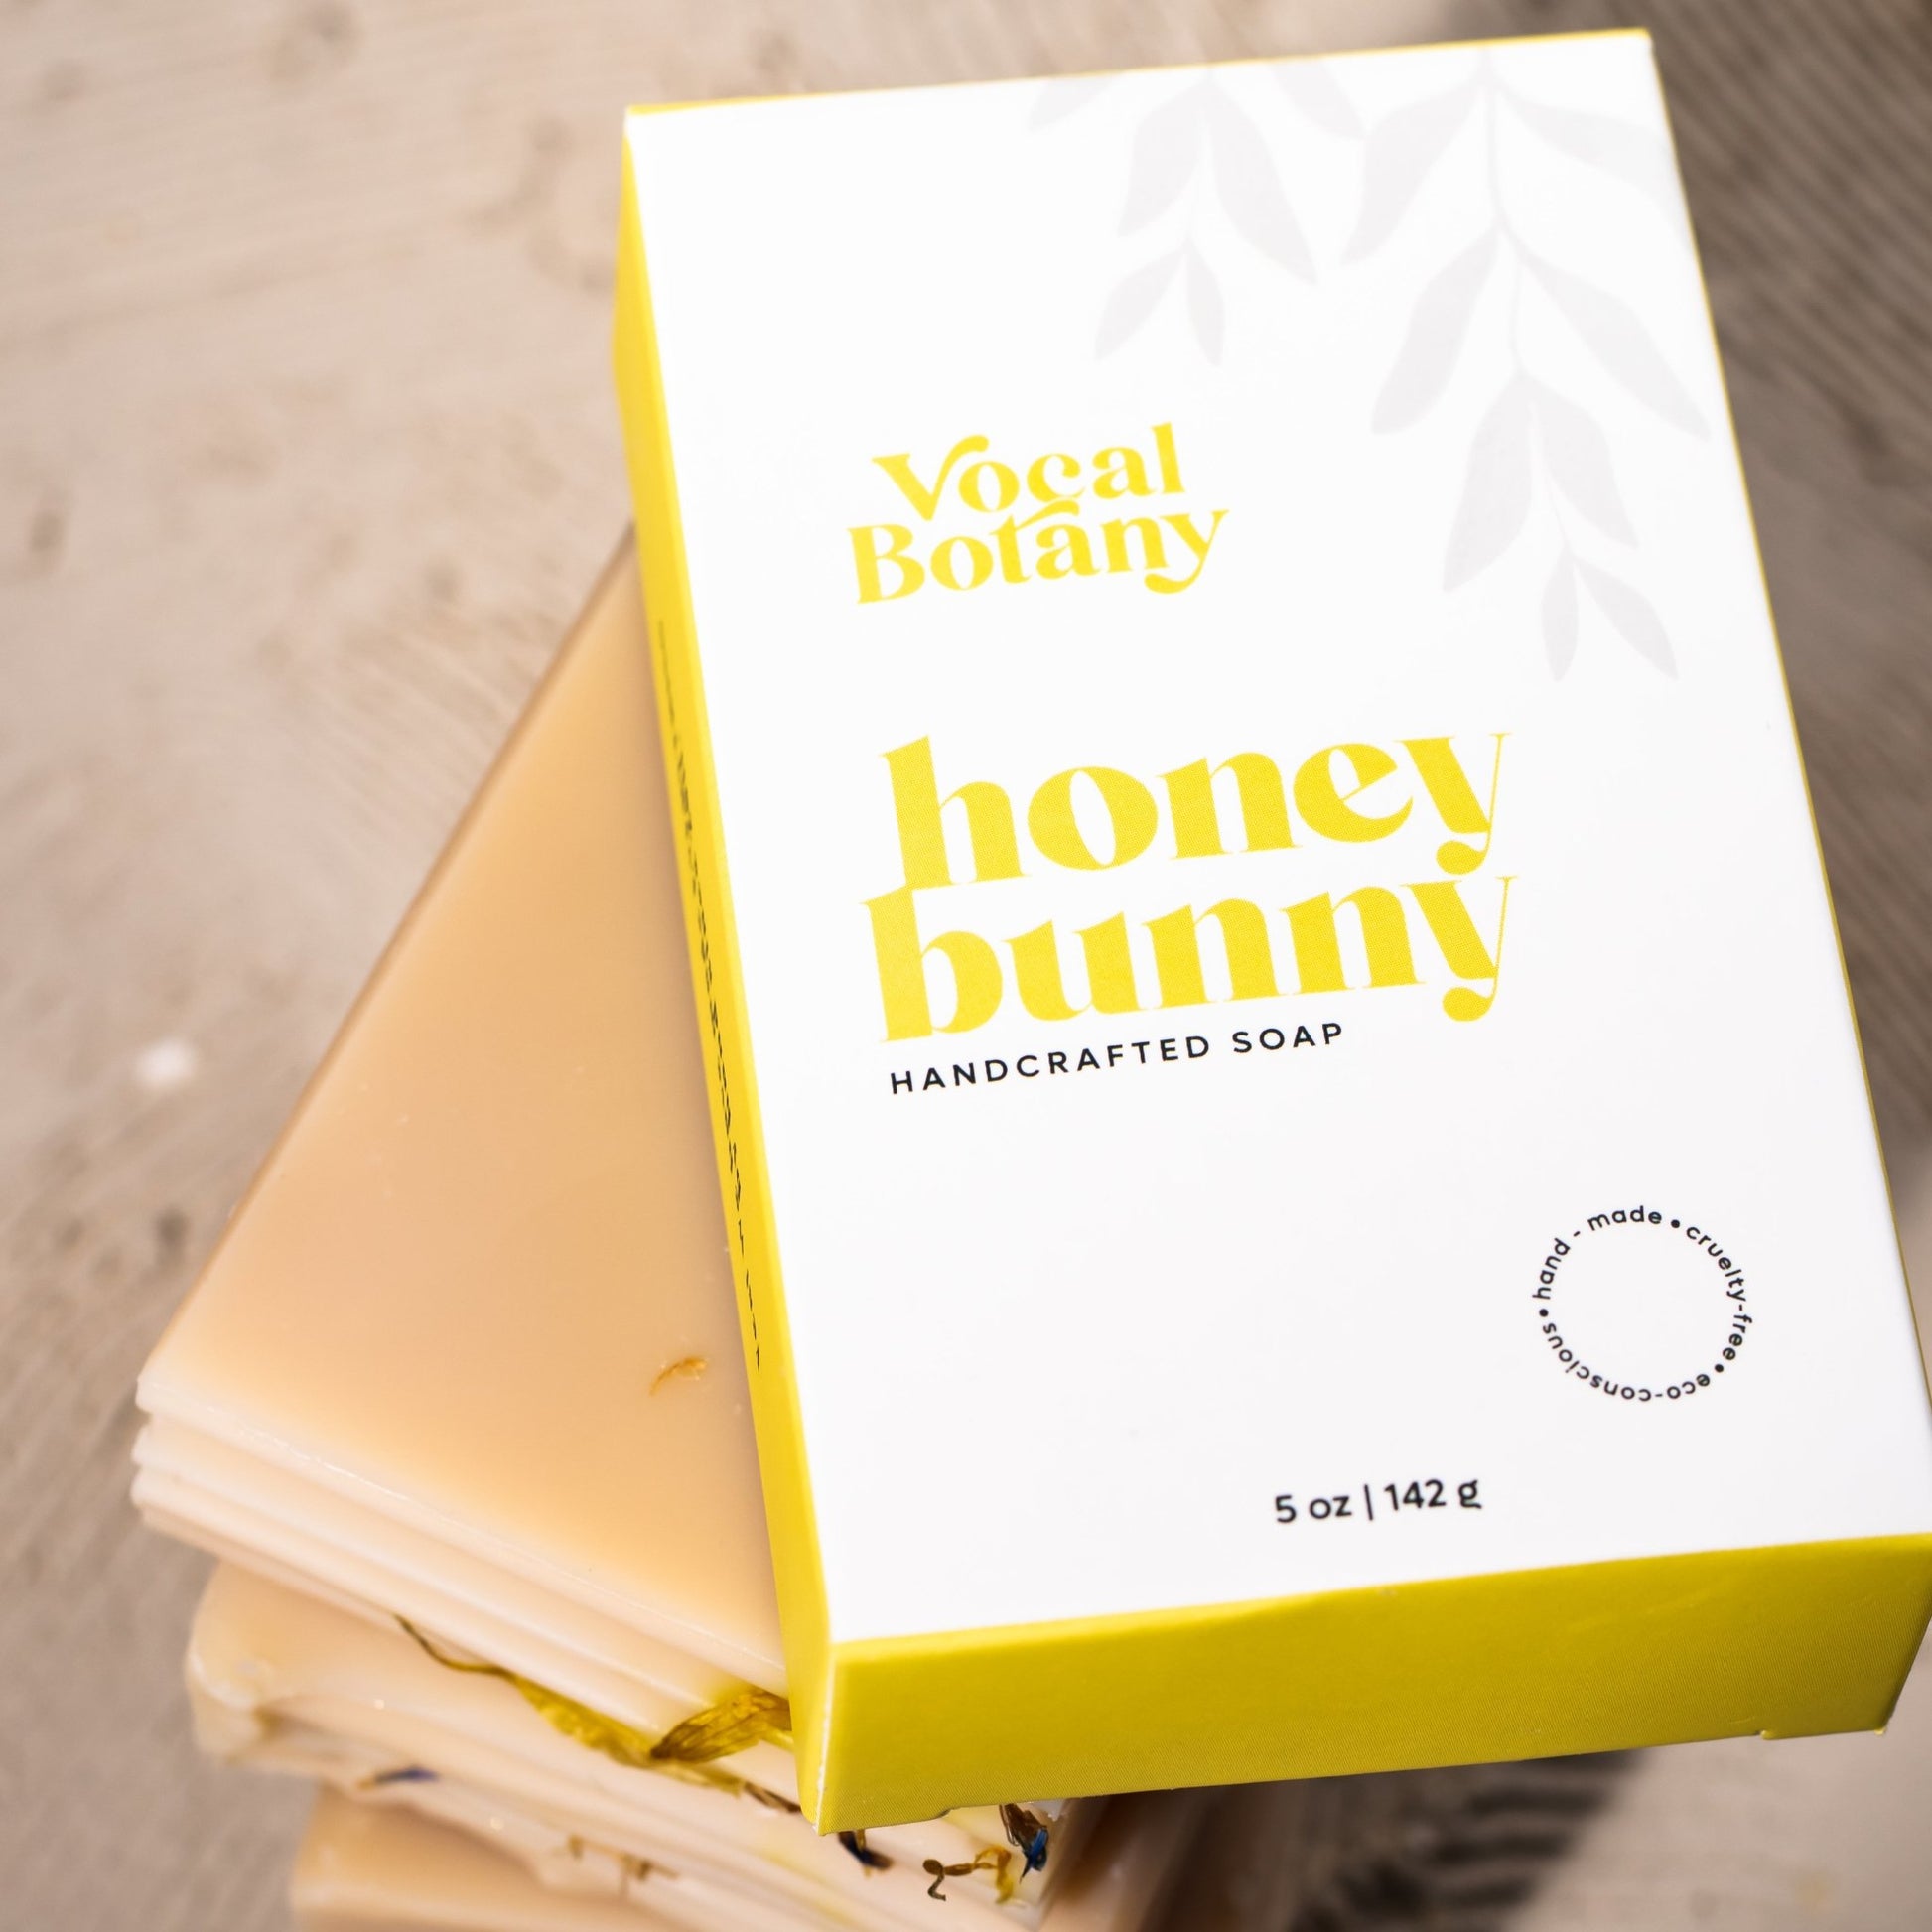 Honey Bunny Soap Bar - Vocal Botany